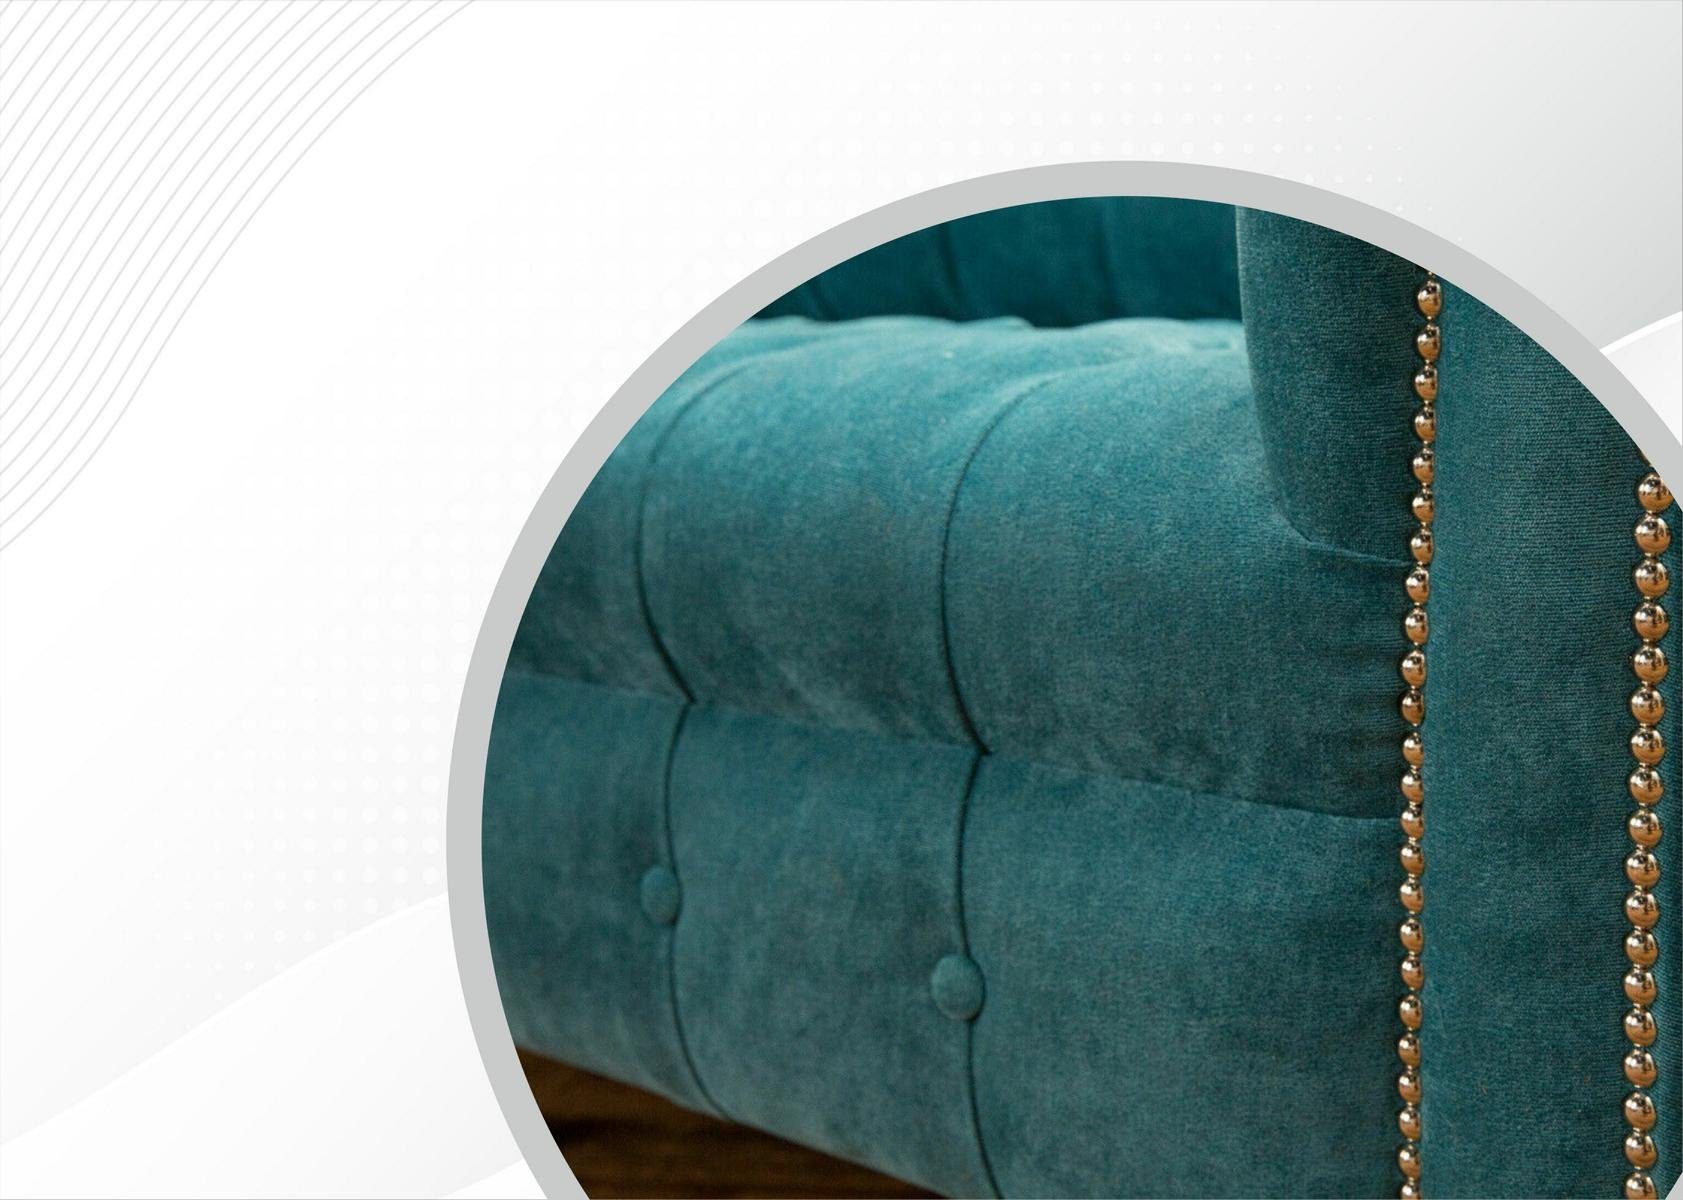 JVmoebel Sofa Klassischer Sitzer, 3 Textil Polster Turkis Made Europe in Couch Chesterfield Sofas